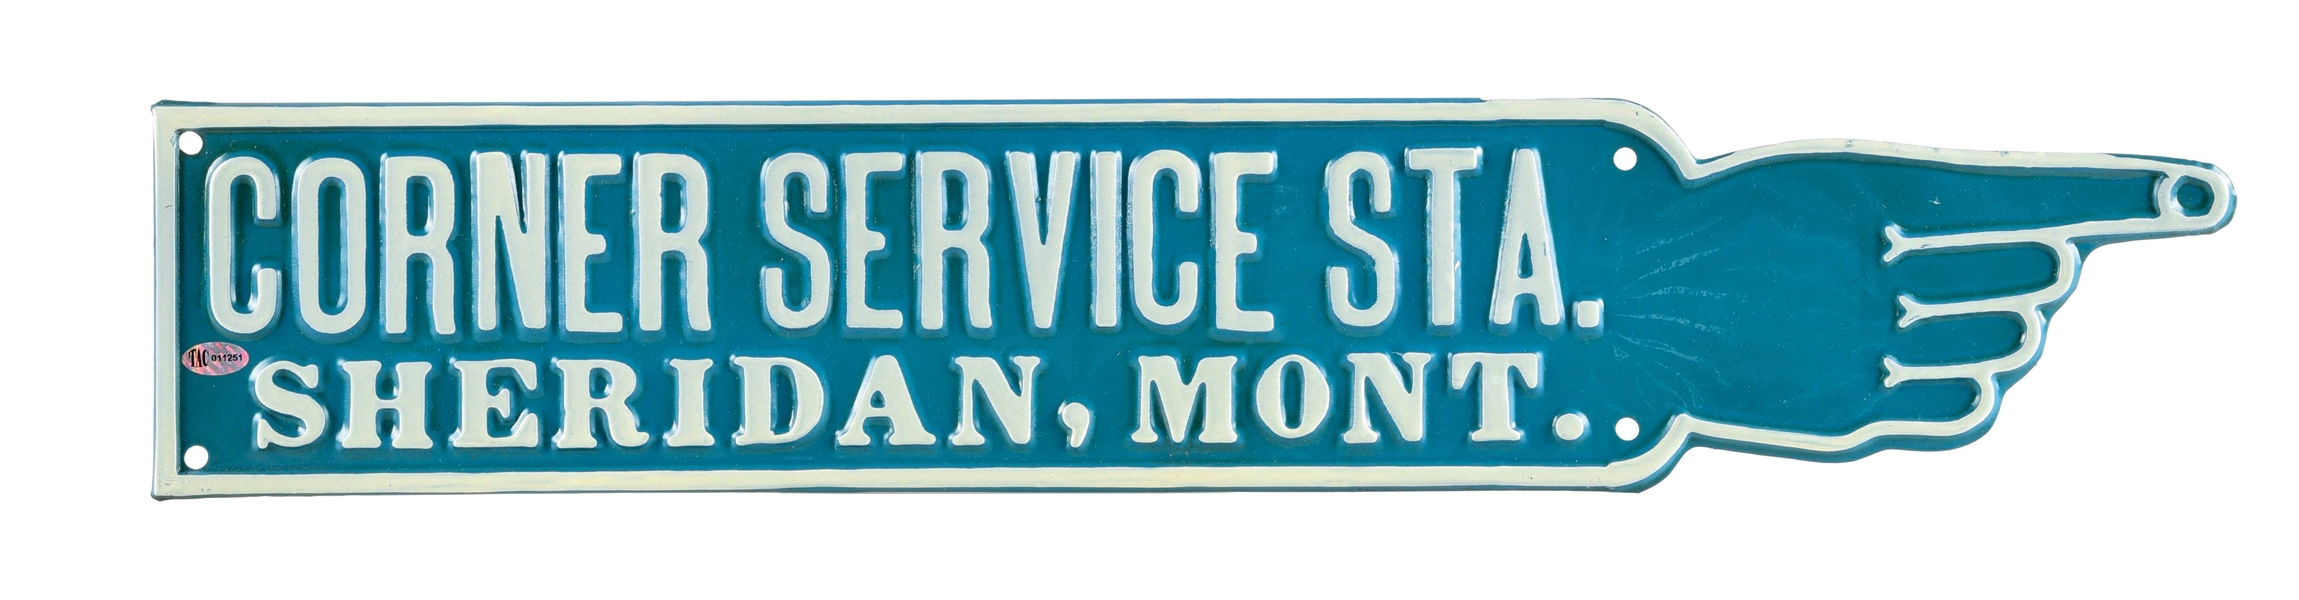 N.O.S. CORNER SERVICE STATION SHERIDAN MONTANA EMBOSSED TIN FINGER POINTER SIGN. 